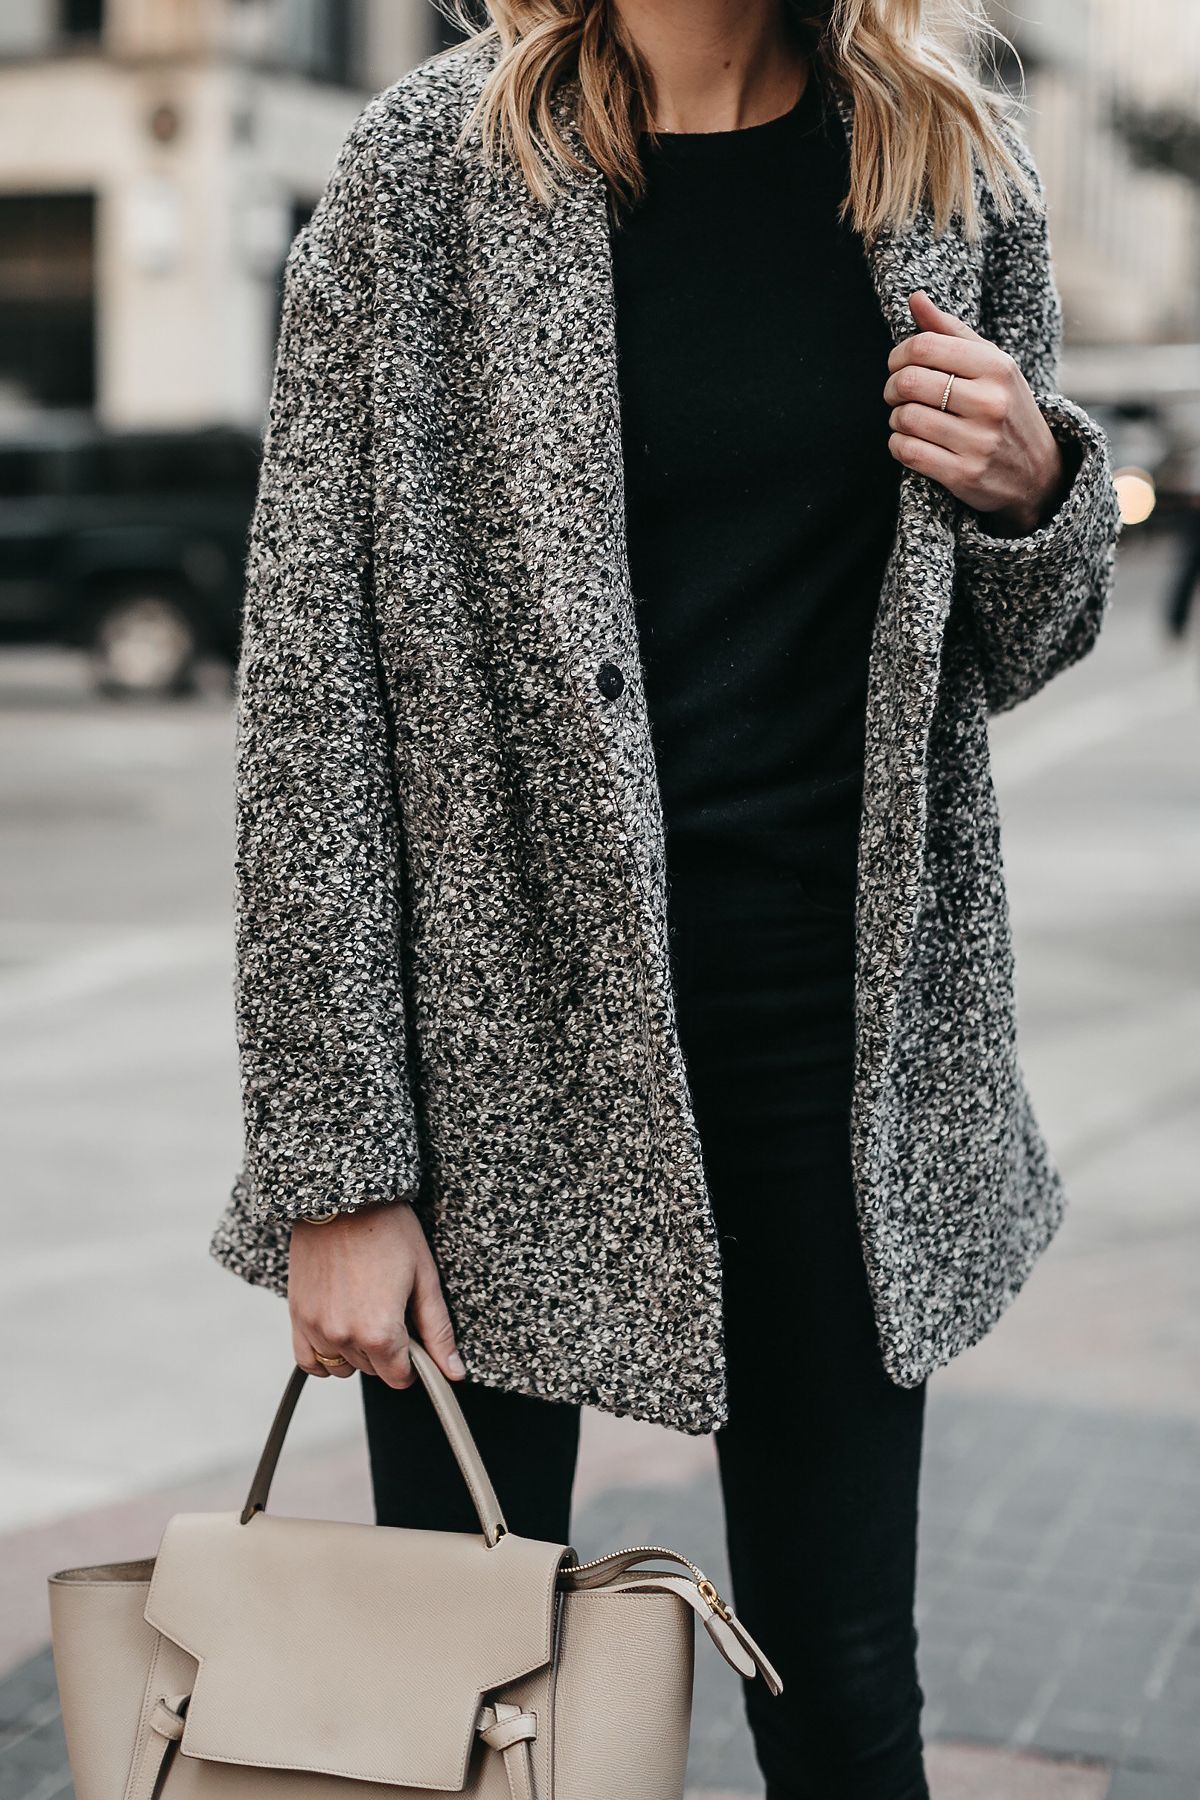 Abercrombie & Fitch Grey Boucle Coat Black Sweater Fashion Jackson Dallas Blogger Fashion Blogger Street Style